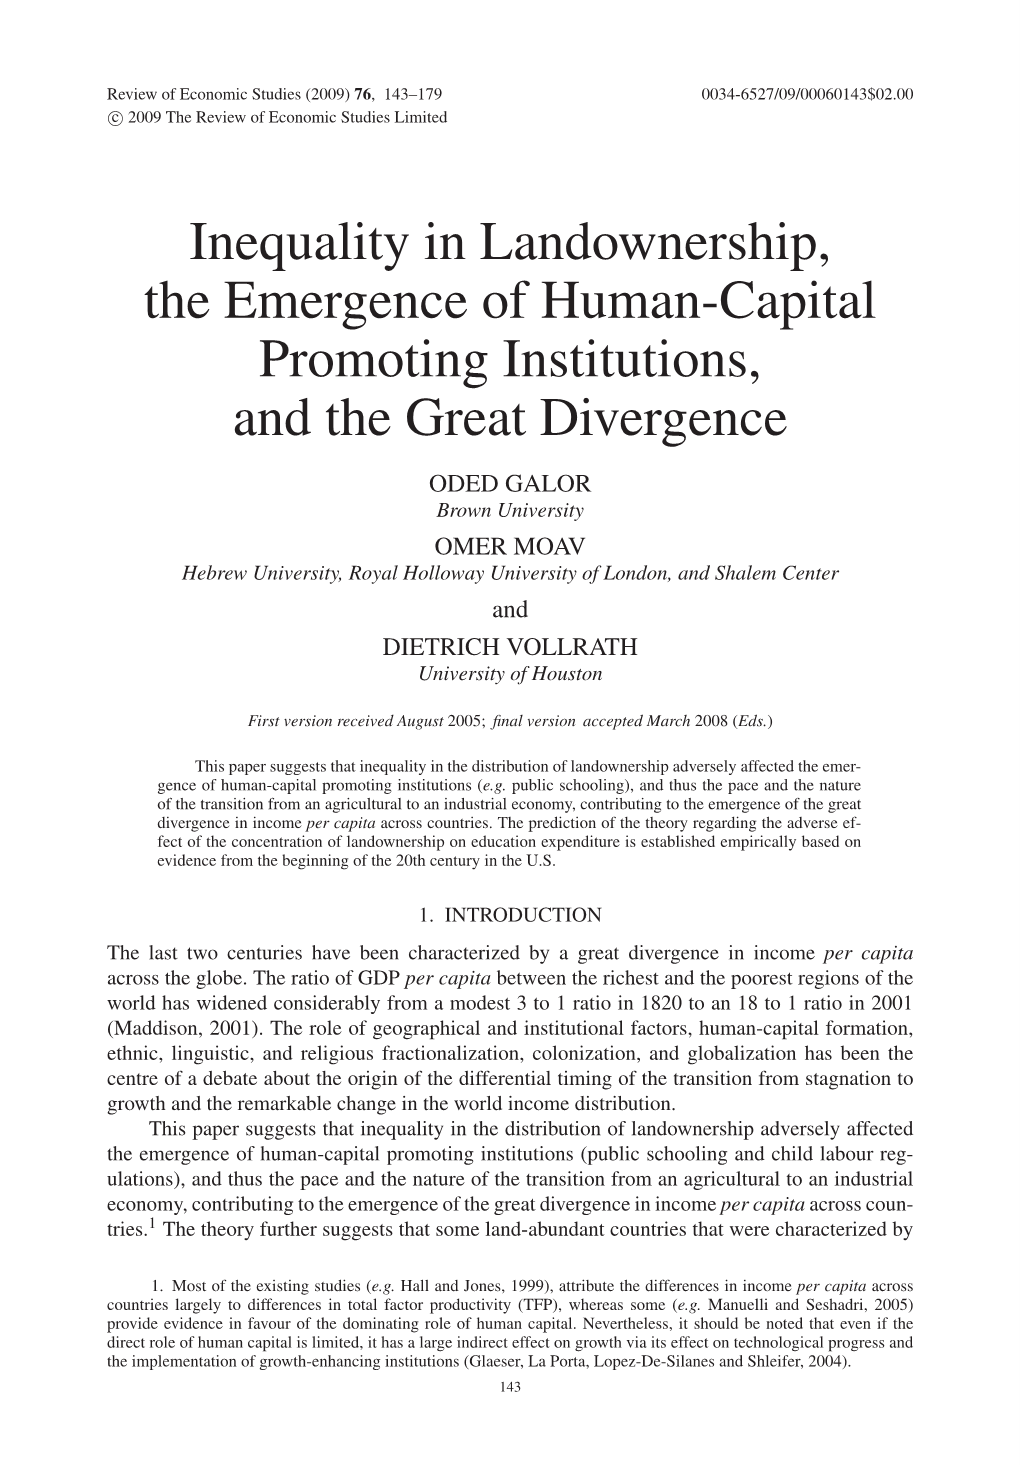 Inequality in Landownership, the Emergence of Human-Capital